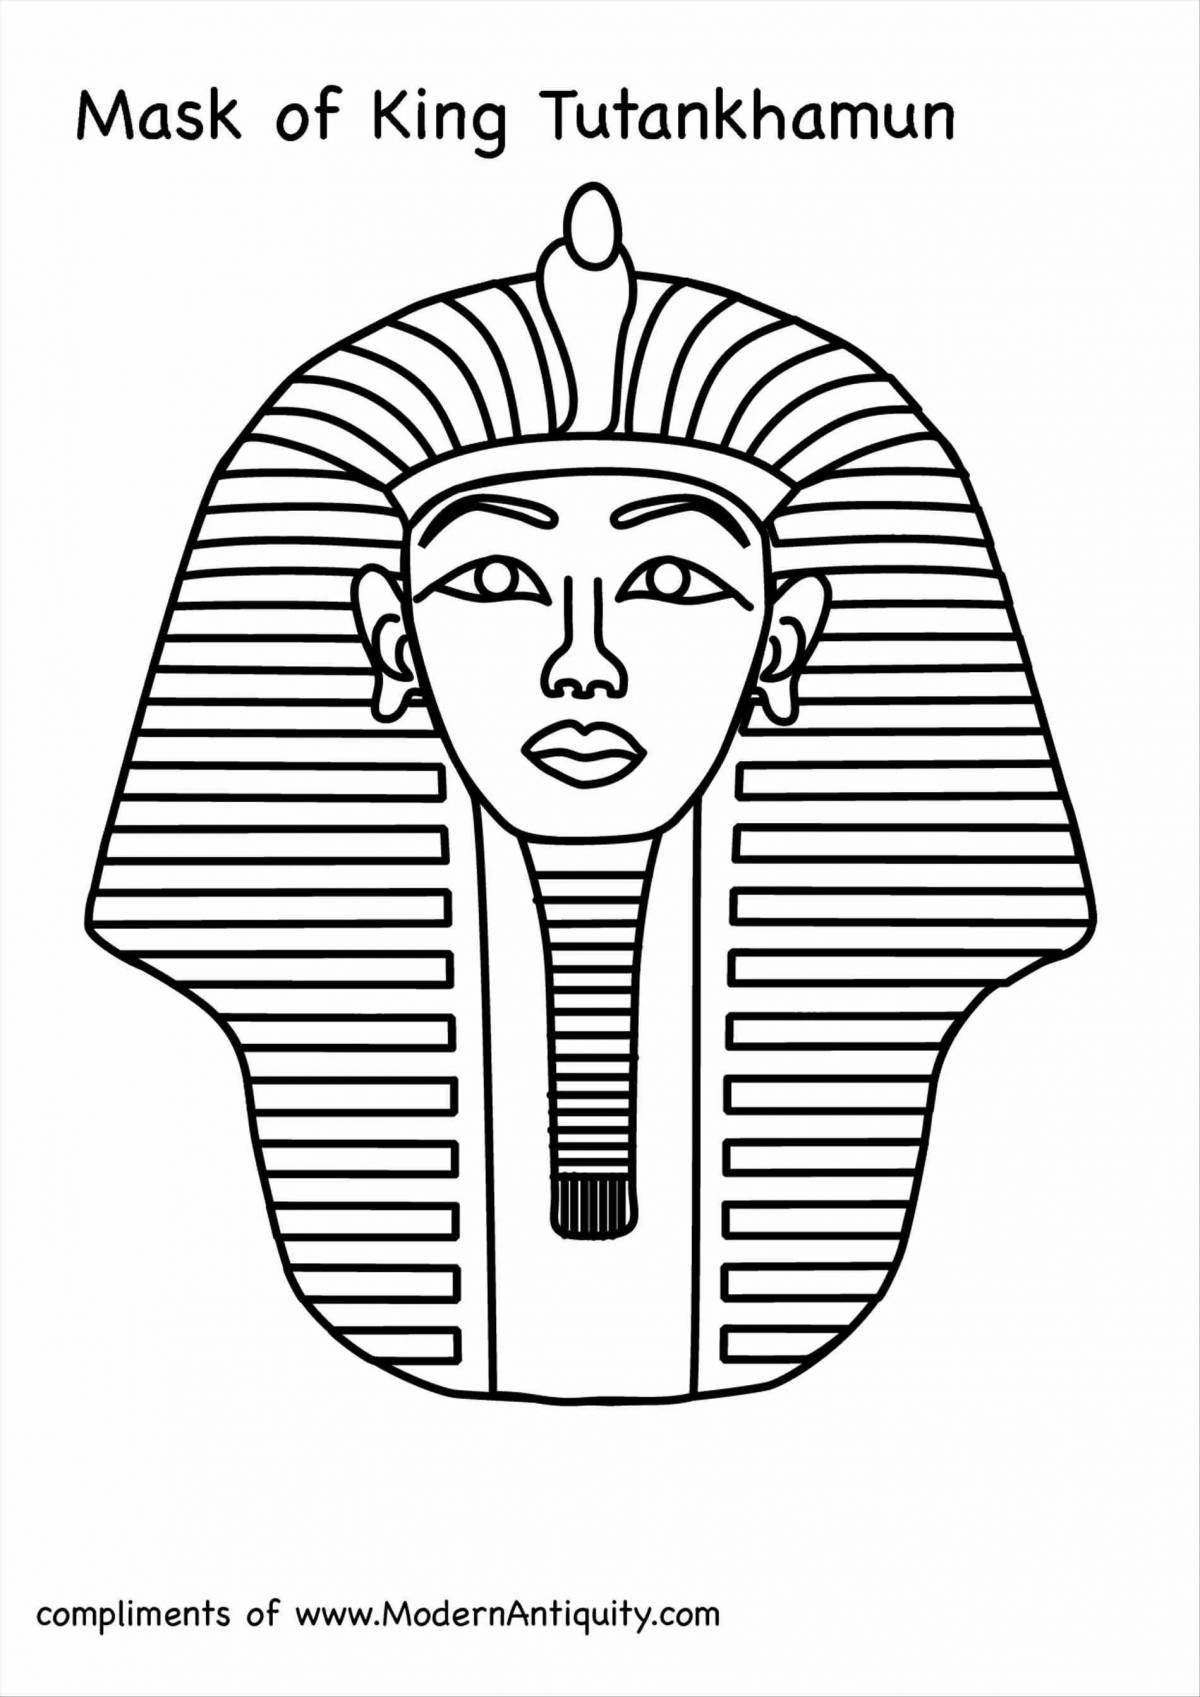 Mask of Pharaoh Tutankhamen from 5 class #5